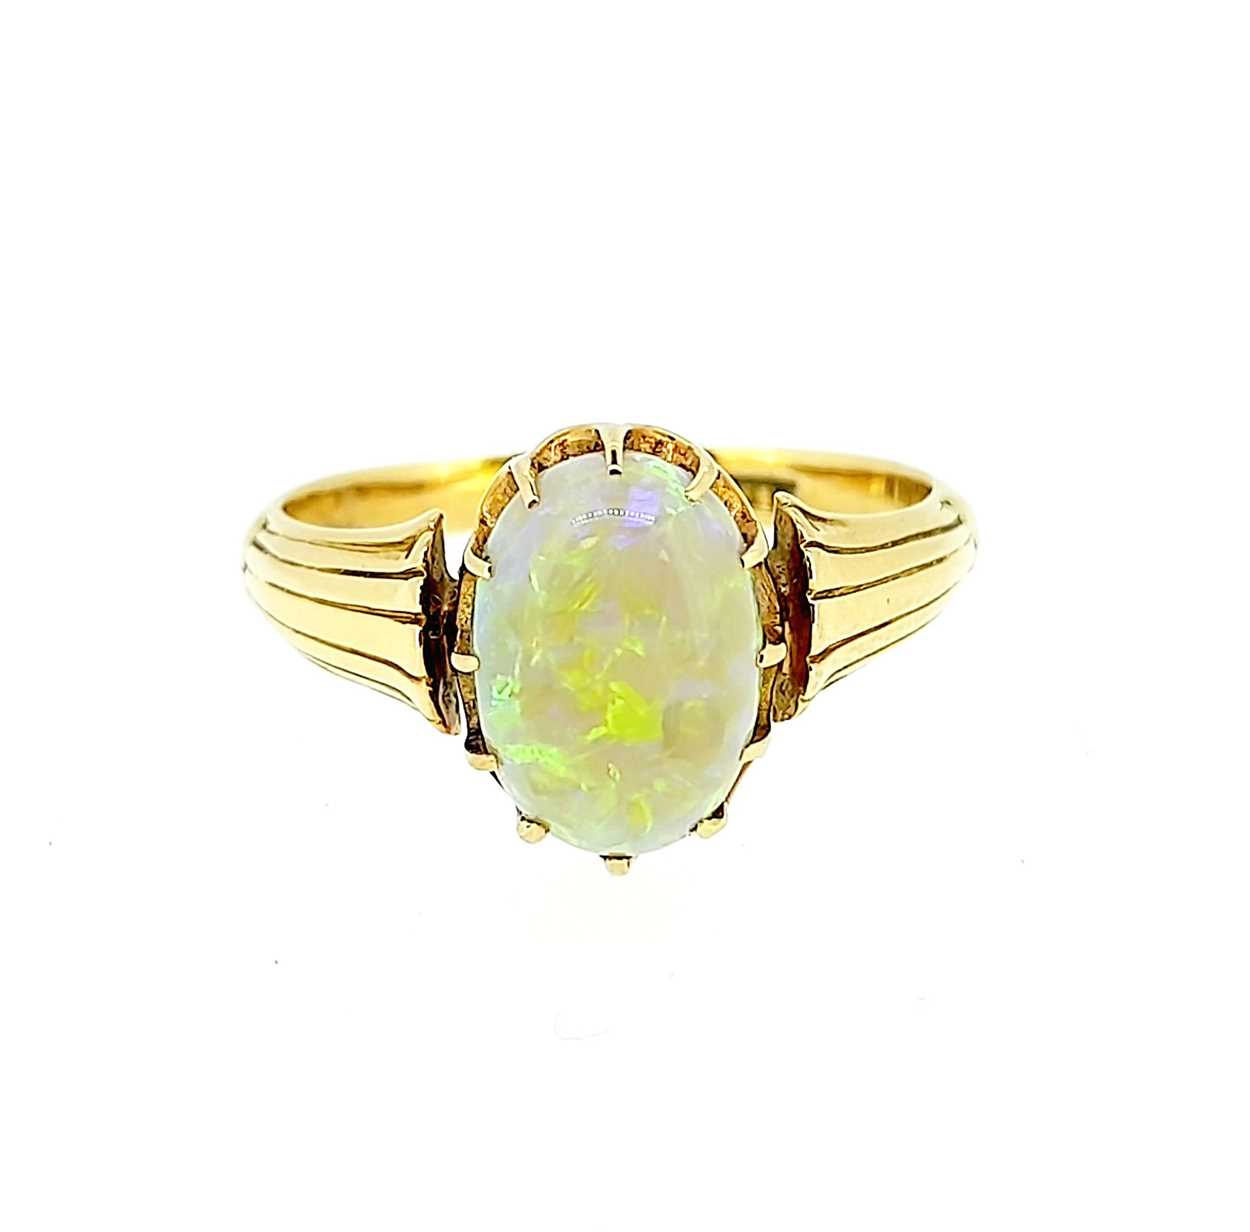 A single stone opal dress ring, - Image 2 of 4